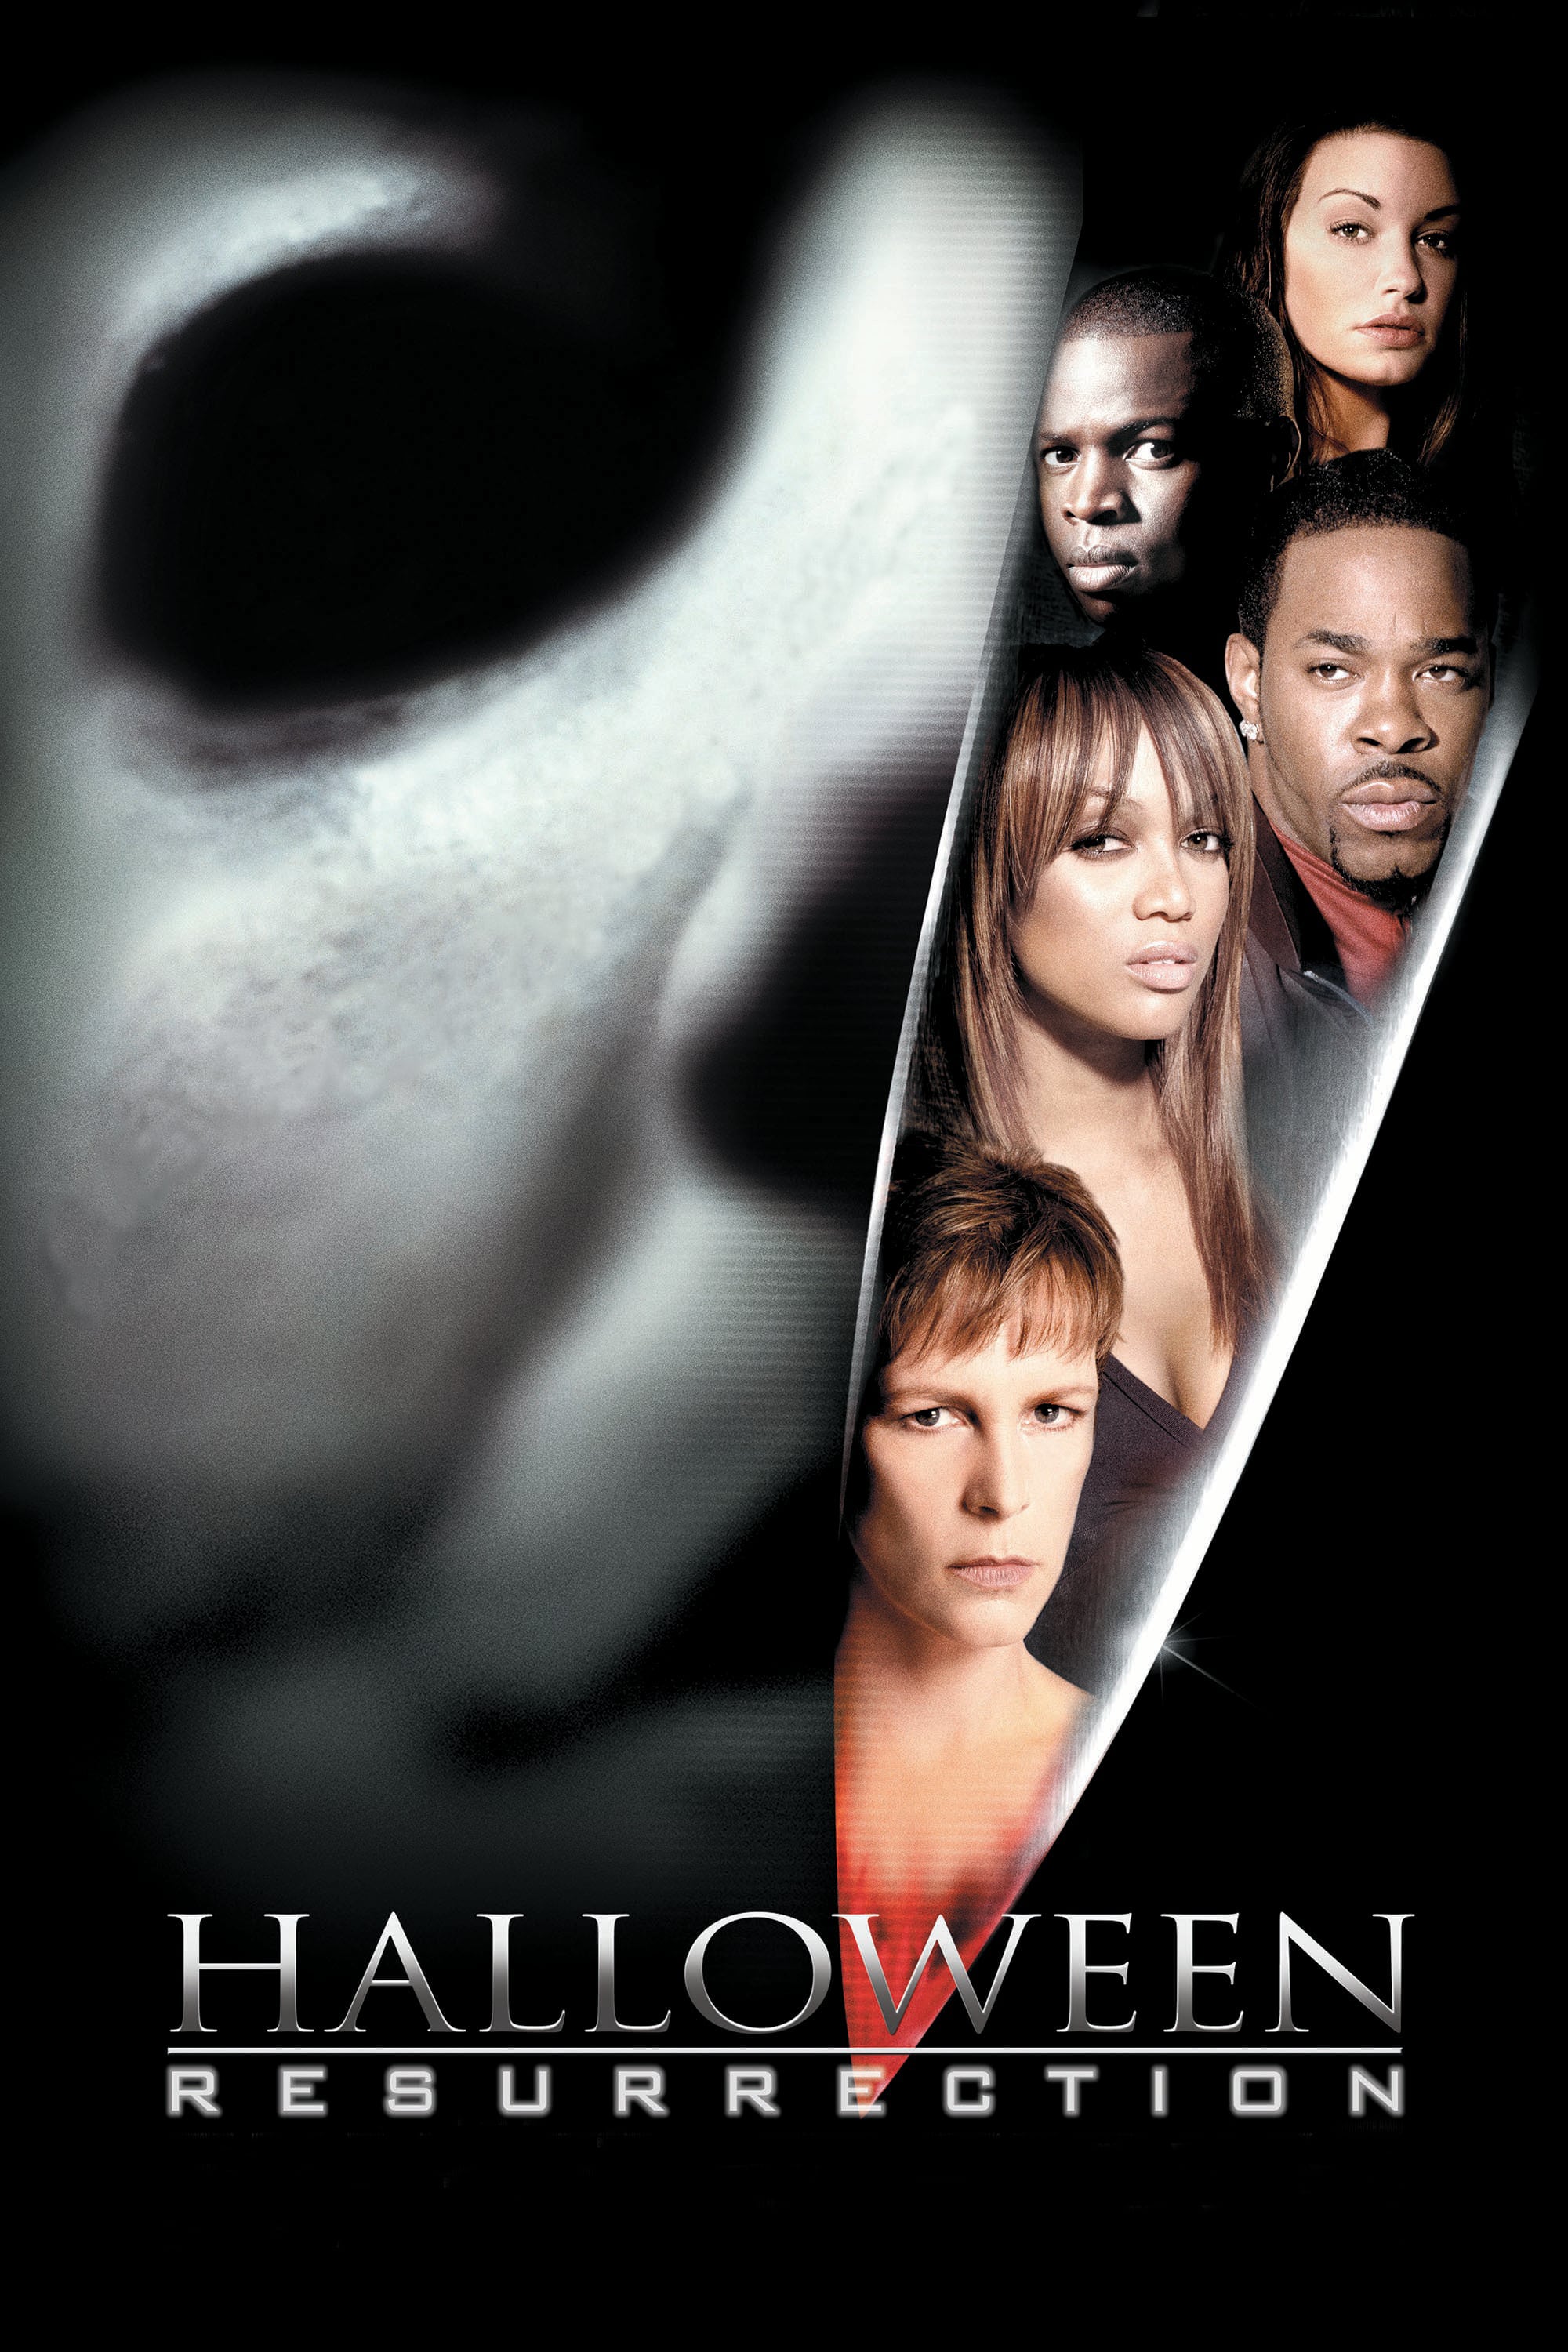 Plakat von "Halloween: Resurrection"